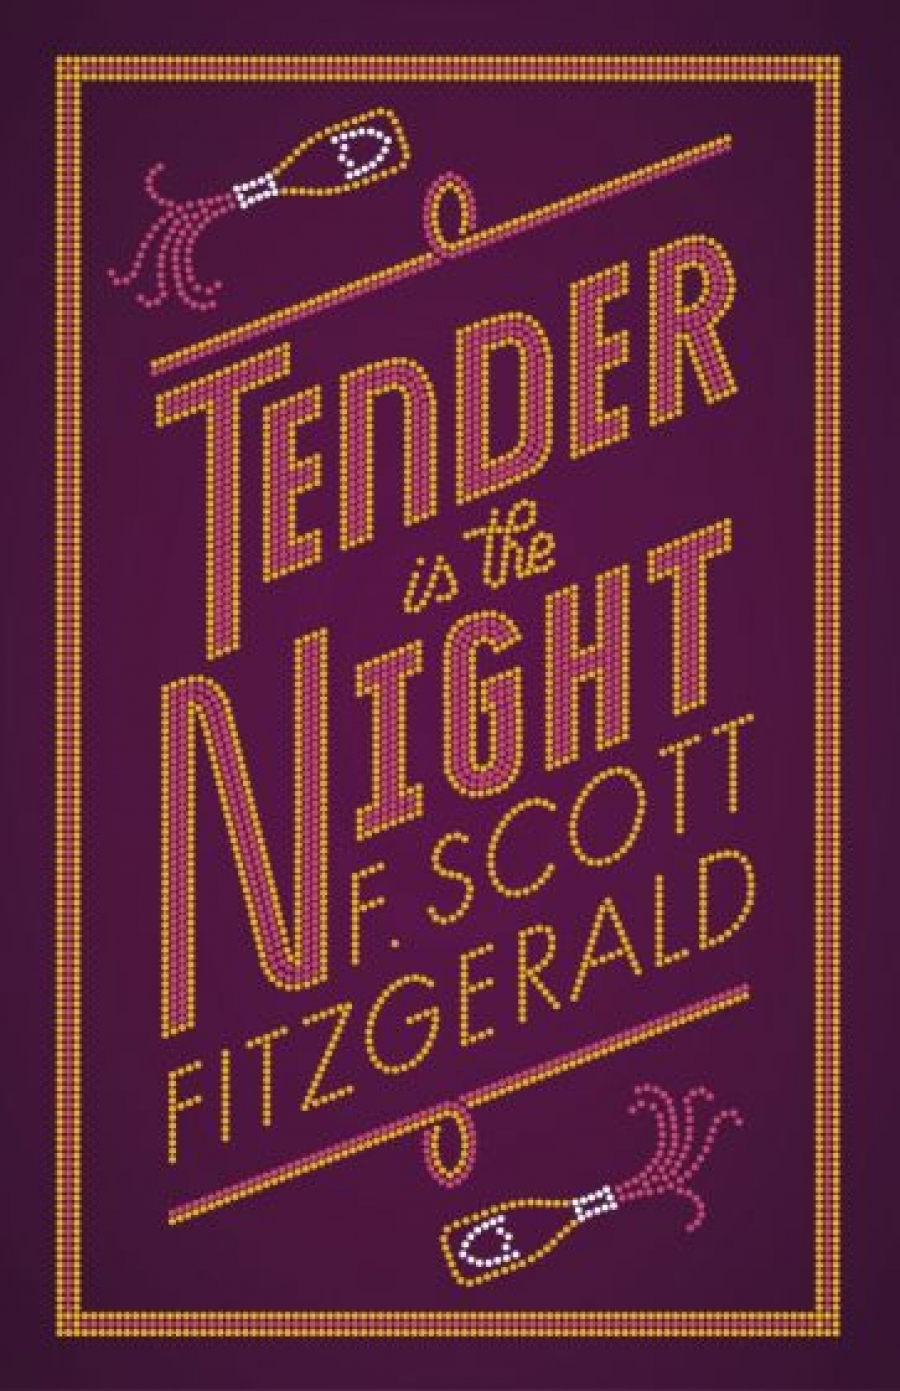 Francis Scott Fitzgerald Tender is the night 